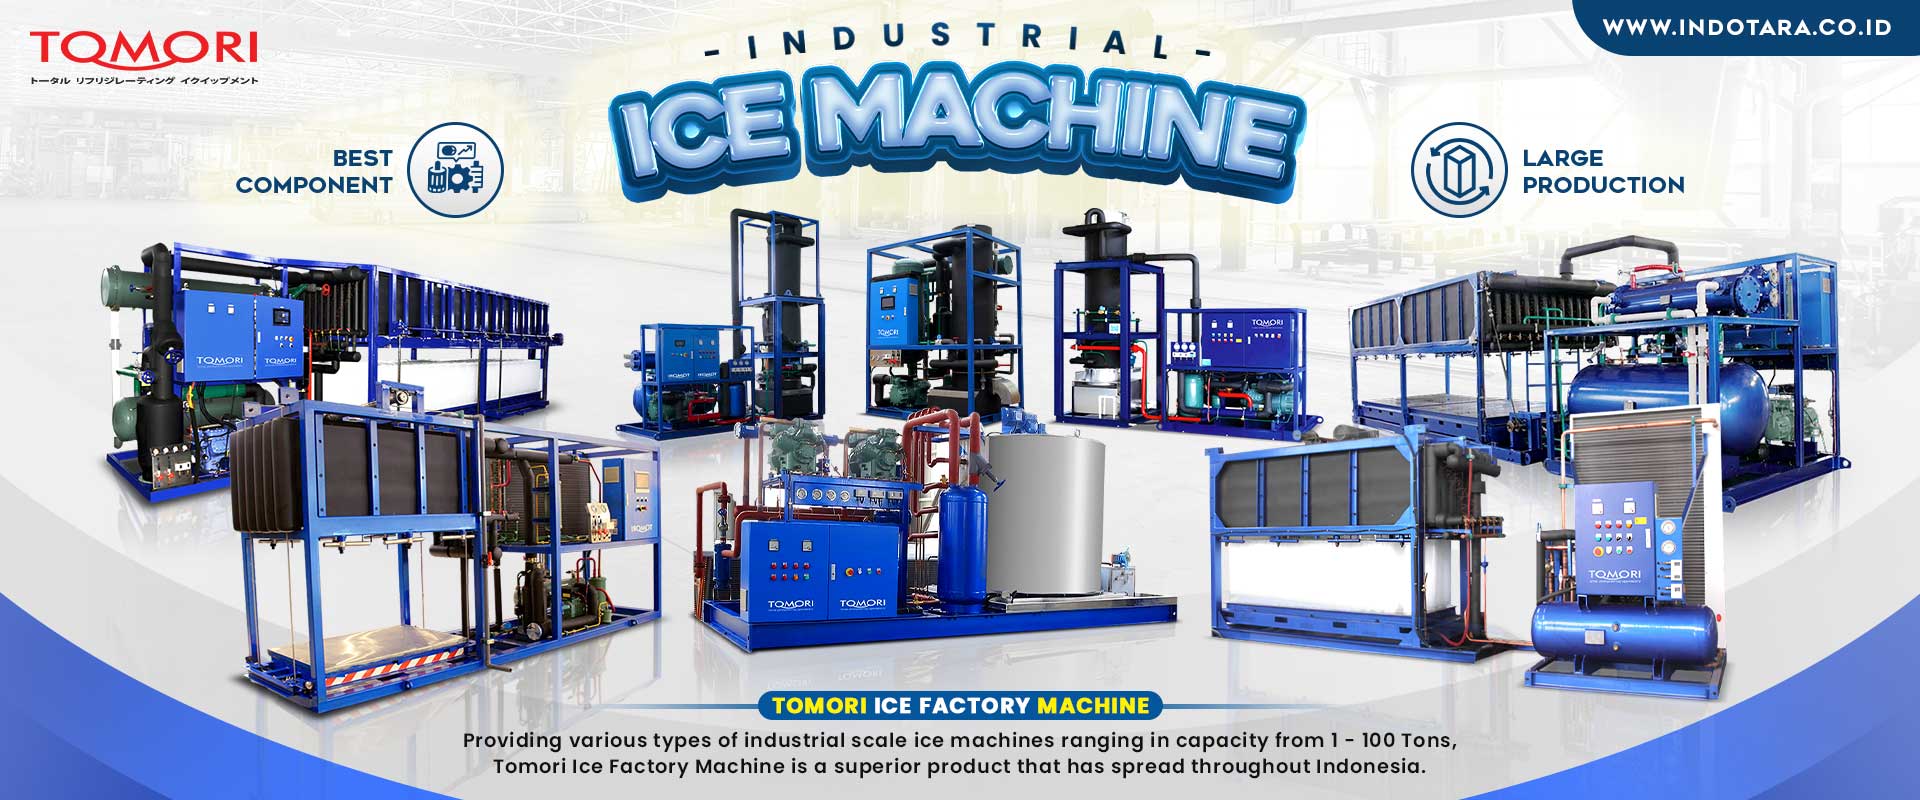 Jual Tomori Block Ice Machine